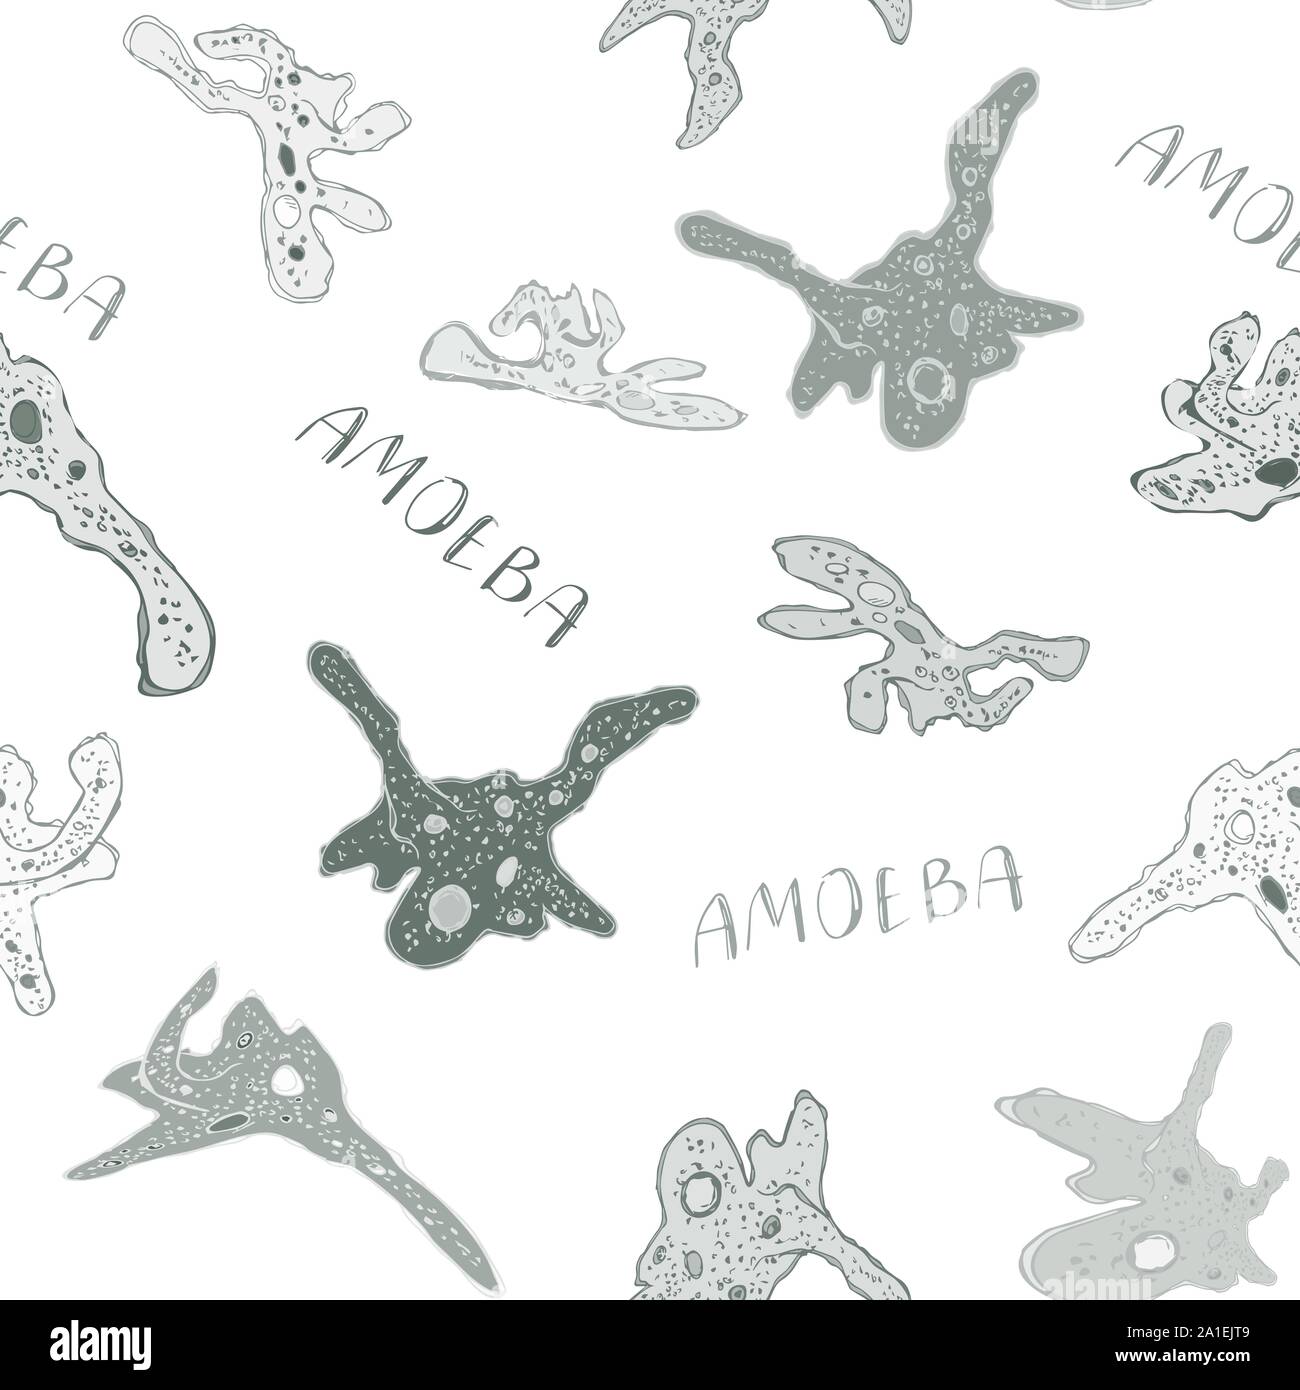 Seamless pattern of Amoeba proteus. Set of hand drawn doodle unicellular protozoa organisms. Cartoon Amoeba in grunge texture style. Vector illustrati Stock Vector